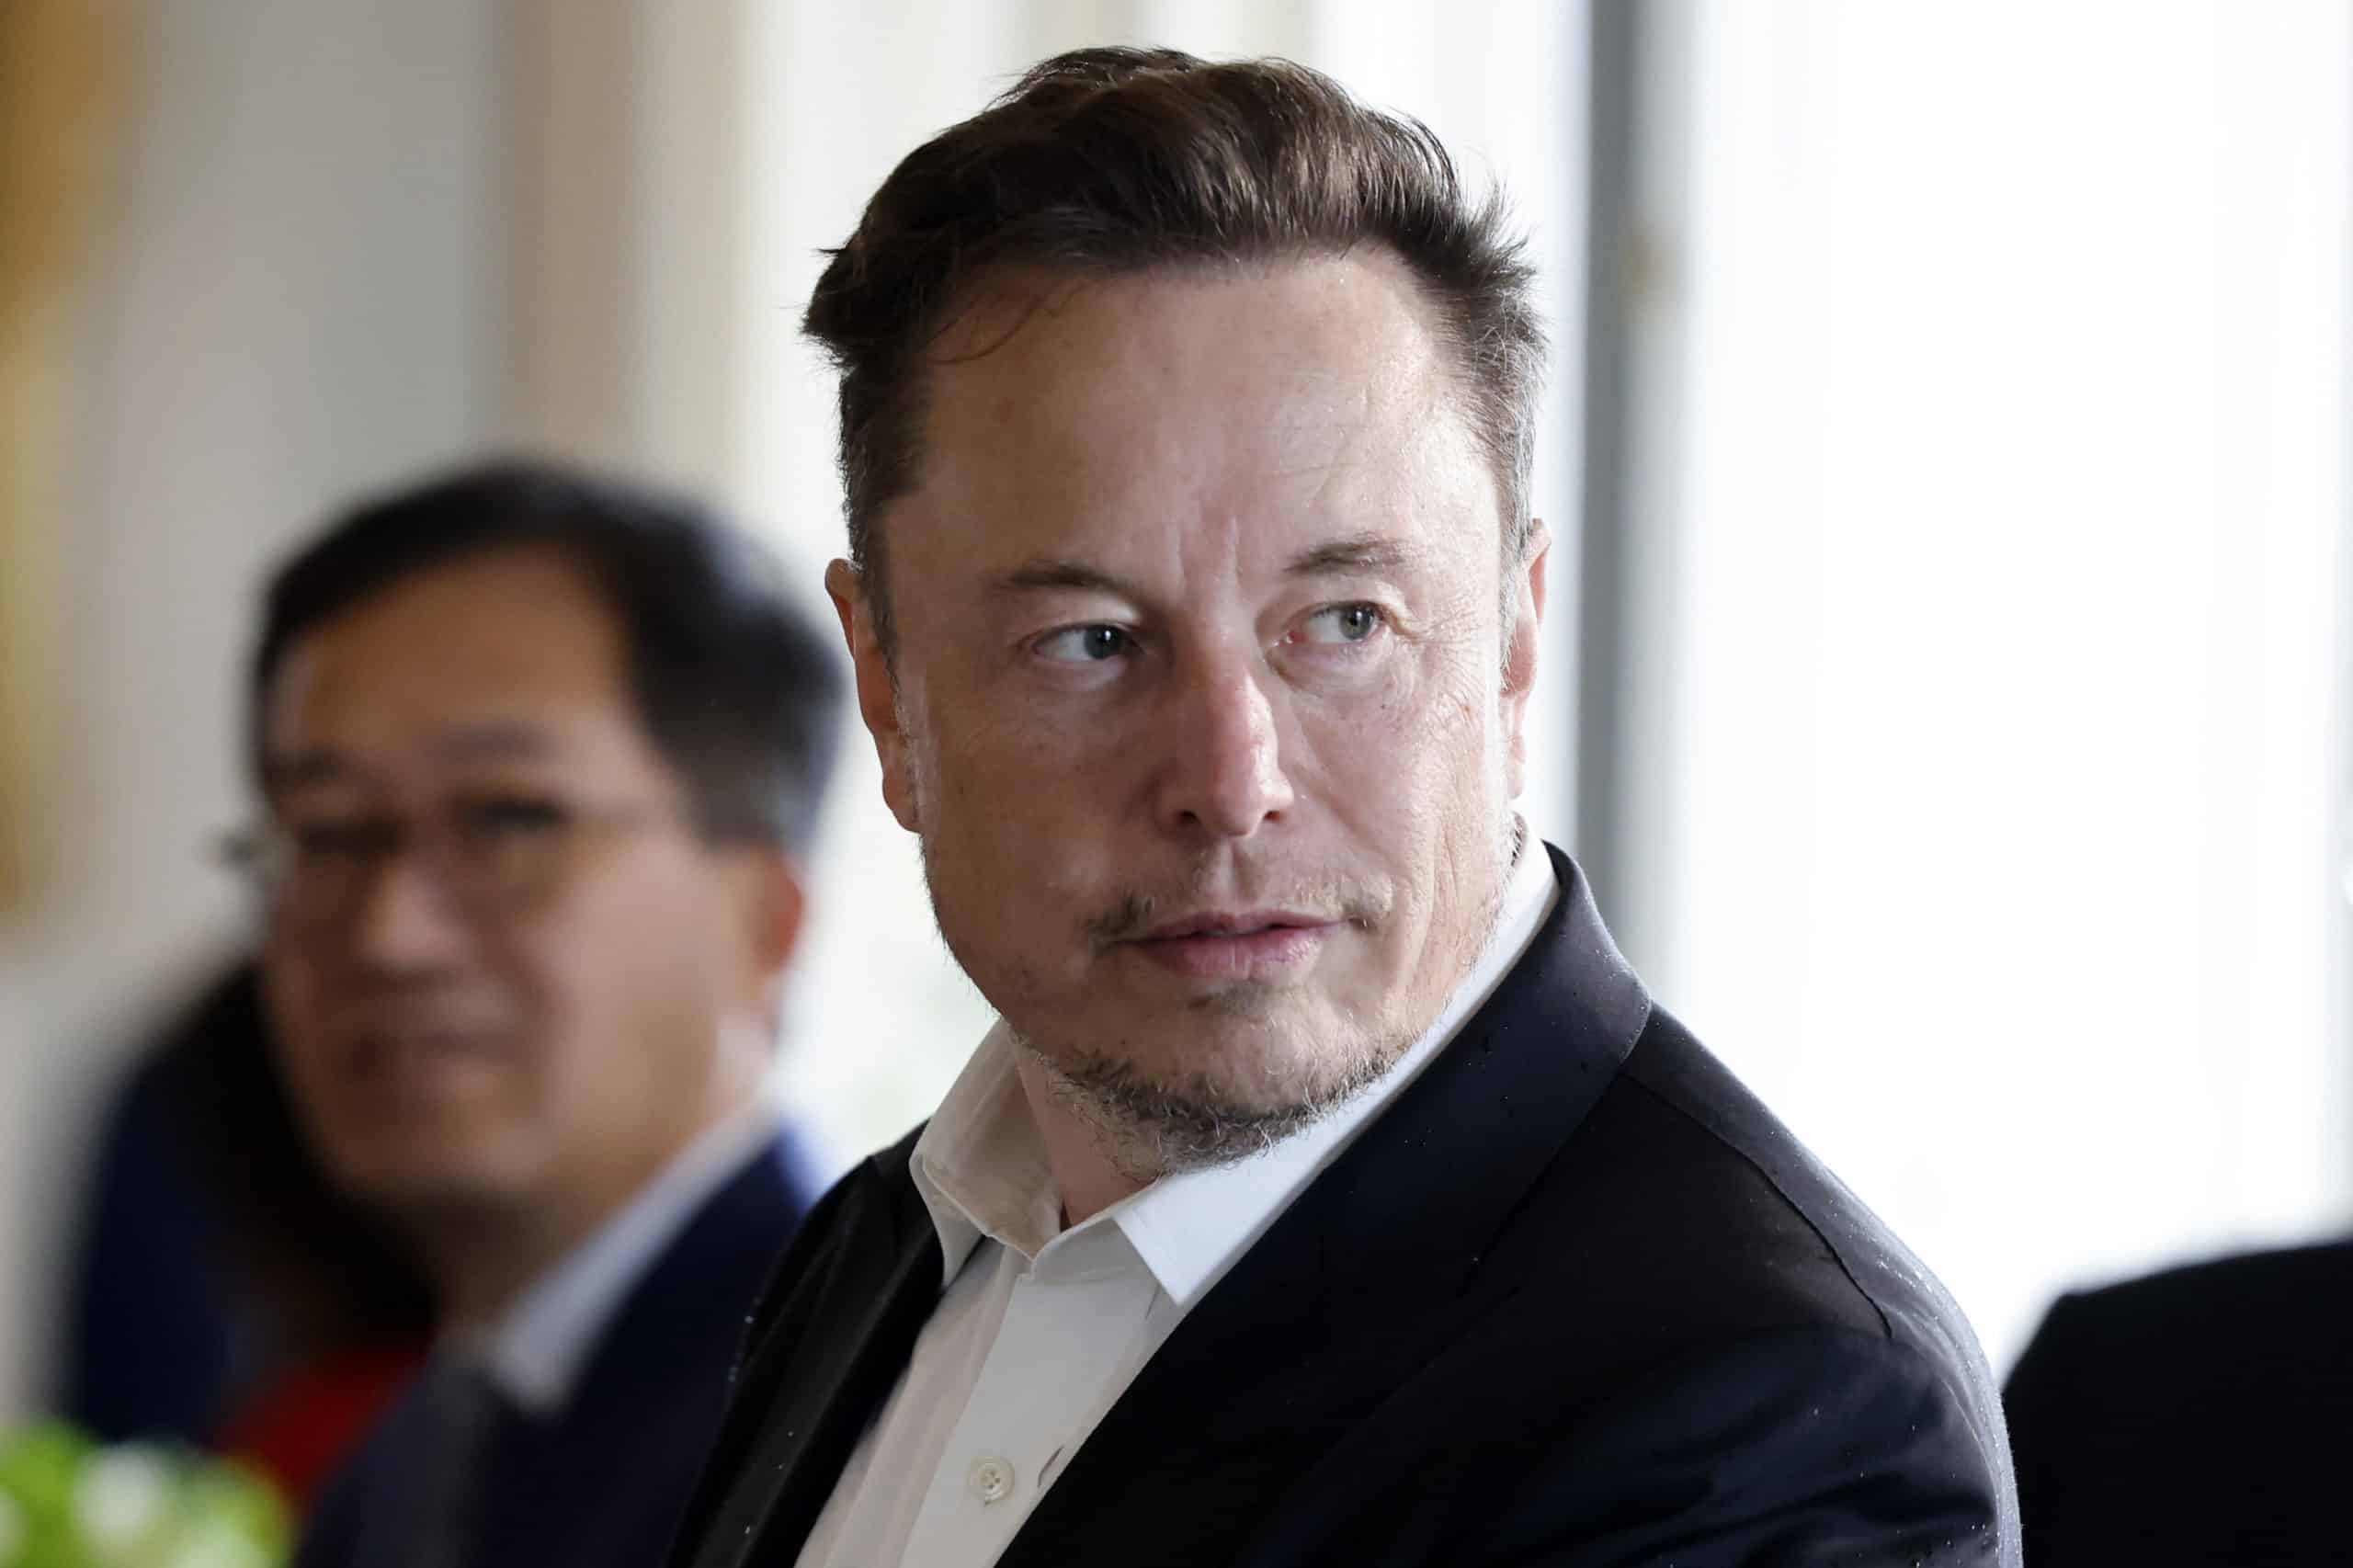 Compañía de Elon Musk anuncia que ofrecerá servicio de Internet satelital en Costa Rica